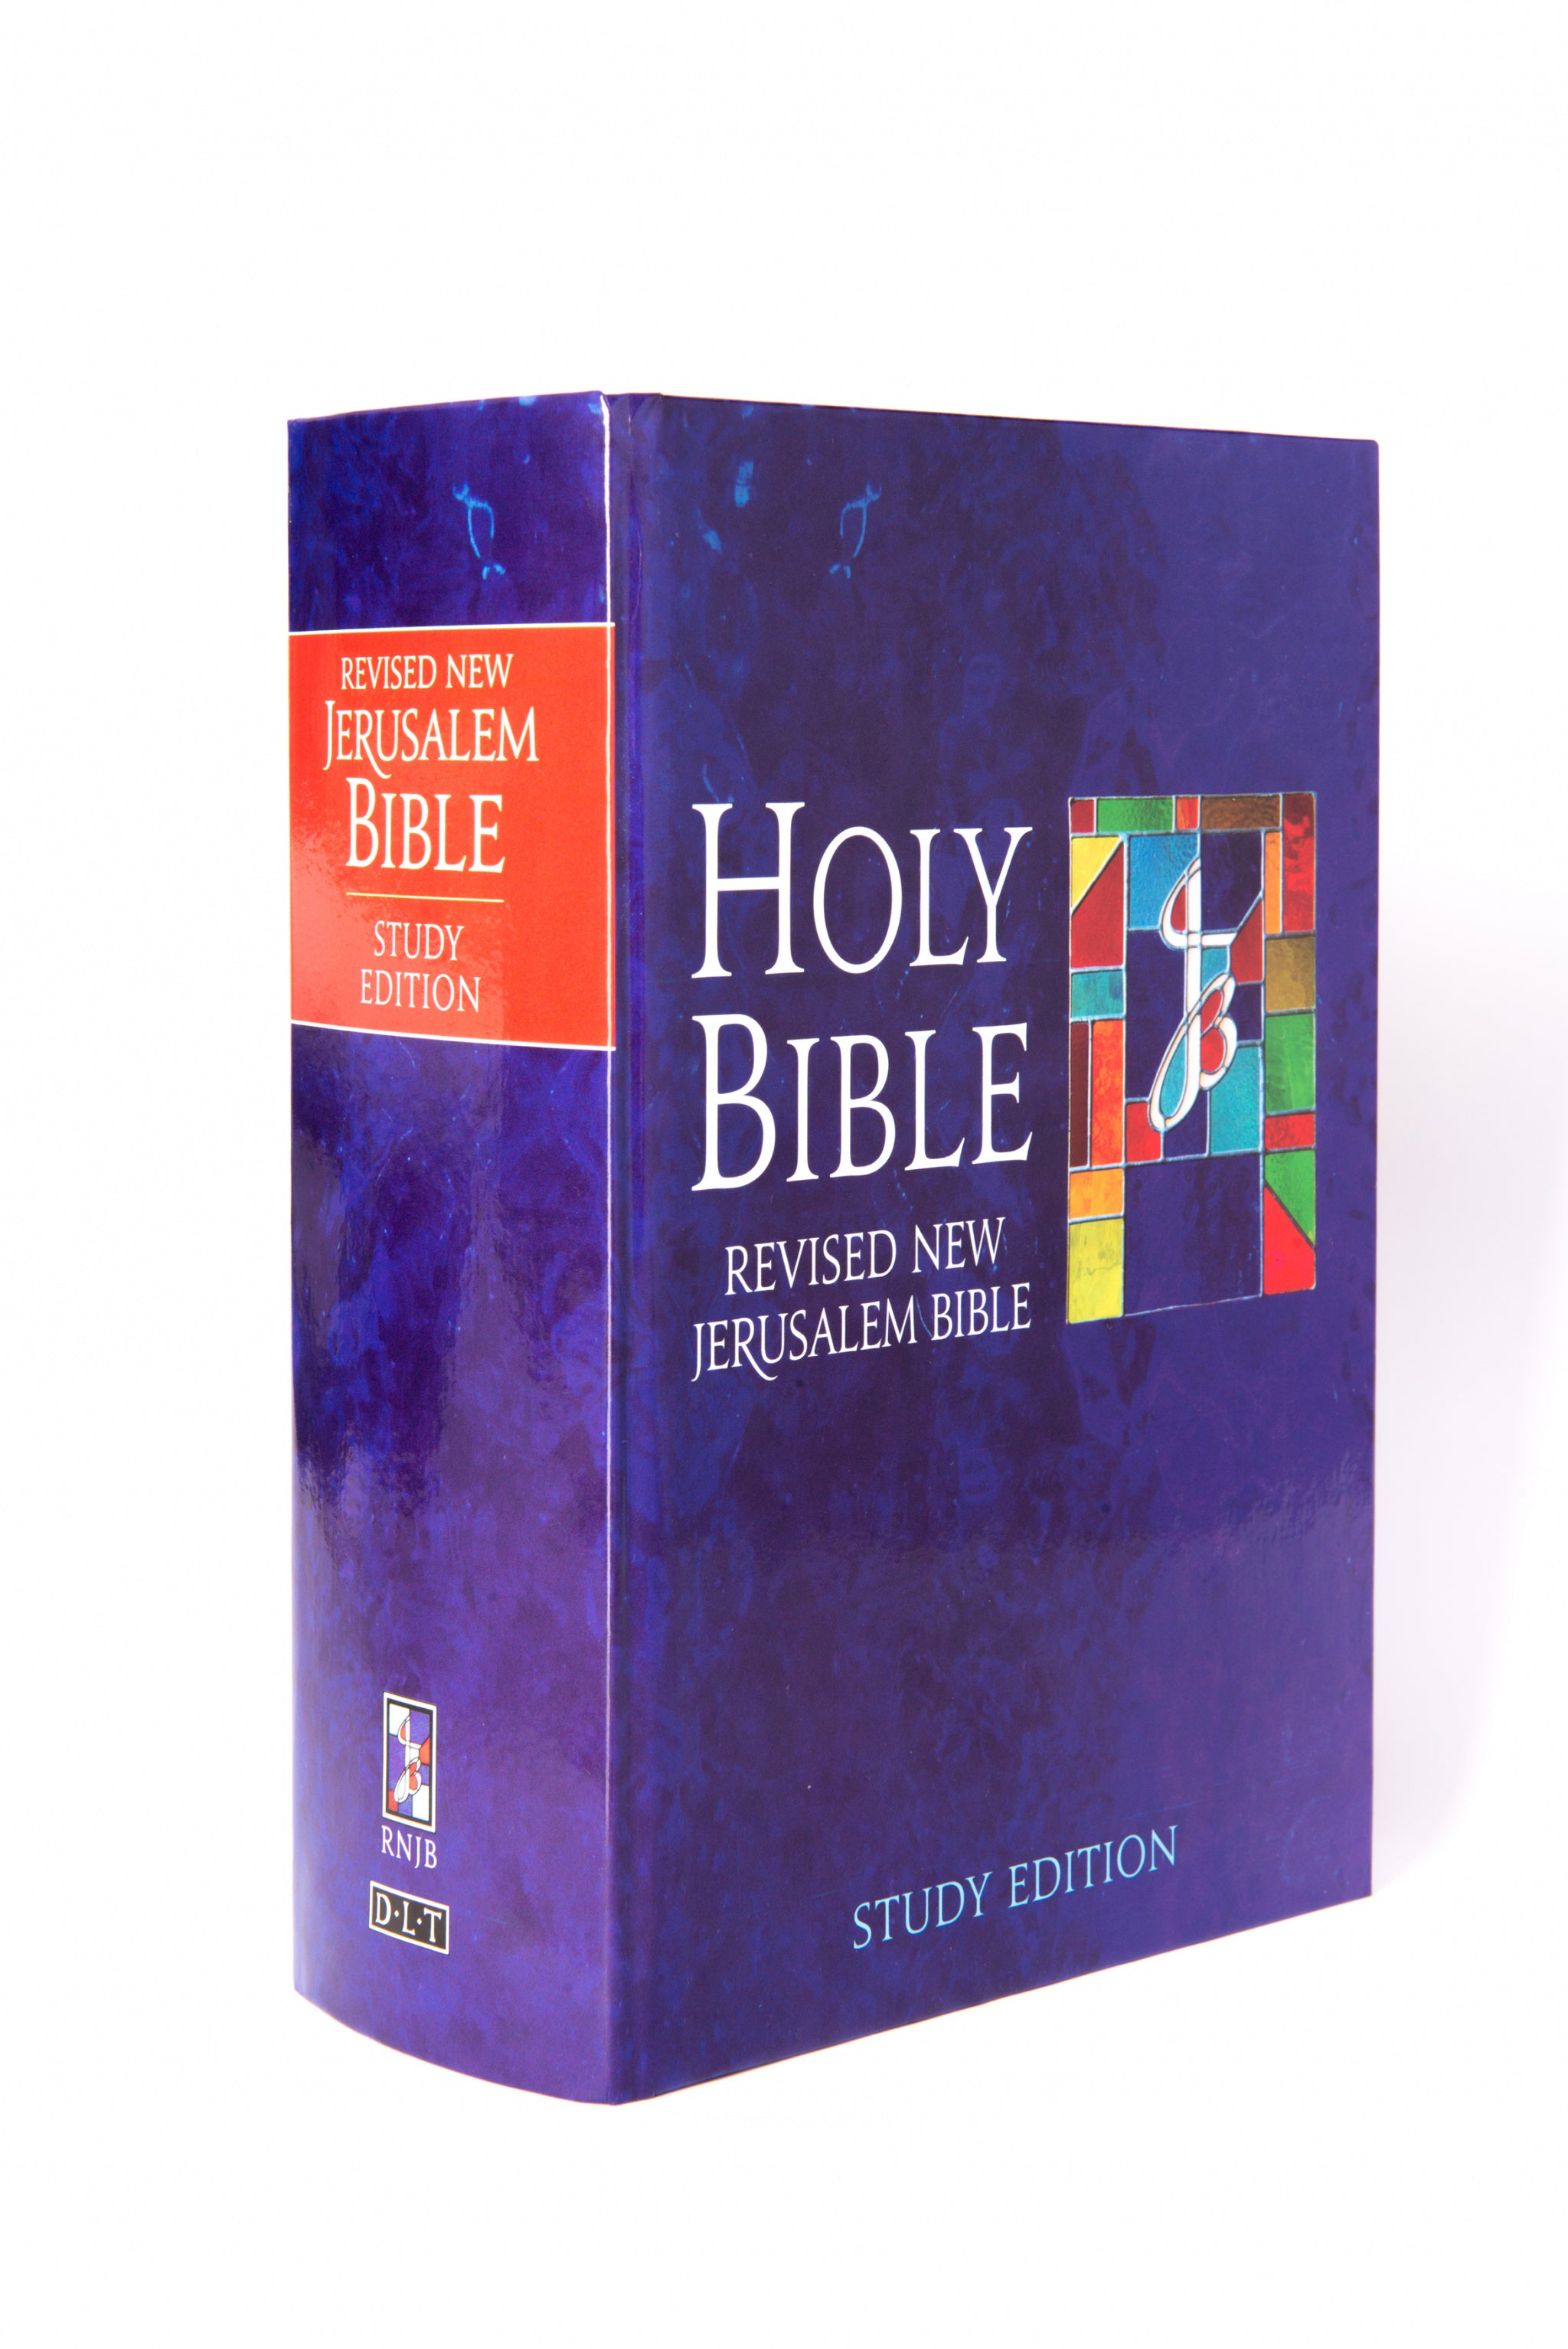 Image of The Revised New Jerusalem Bible Study Edition, Hardback, Maps, Ribbon Marker, Study Notes, Revised Psalter other